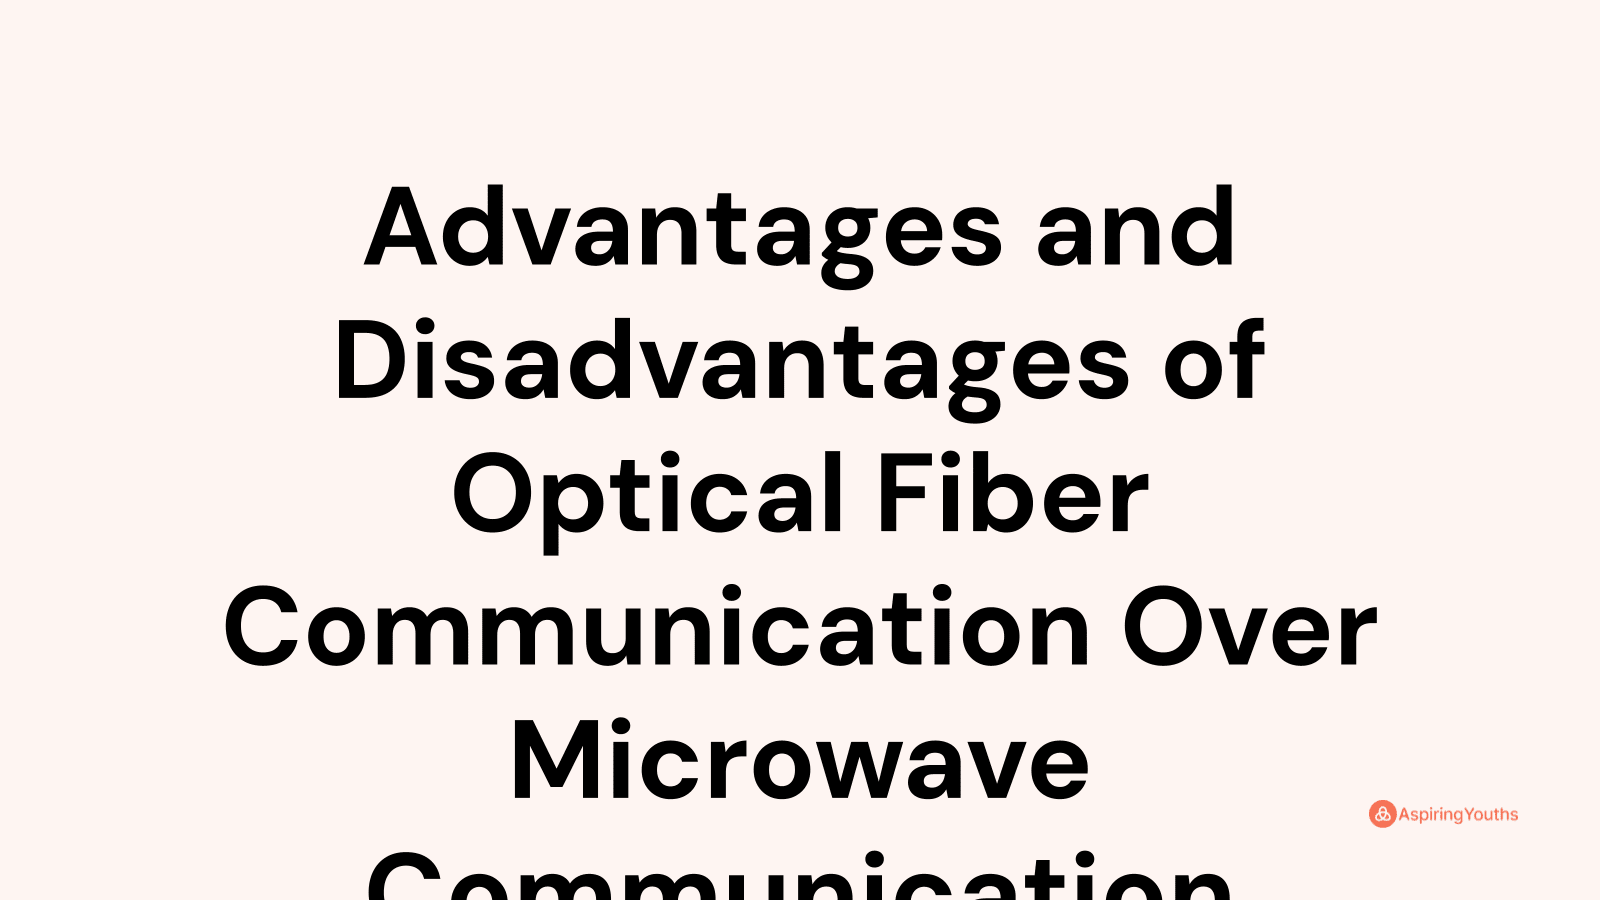 Advantages and disadvantages of Optical Fiber Communication Over Microwave Communication